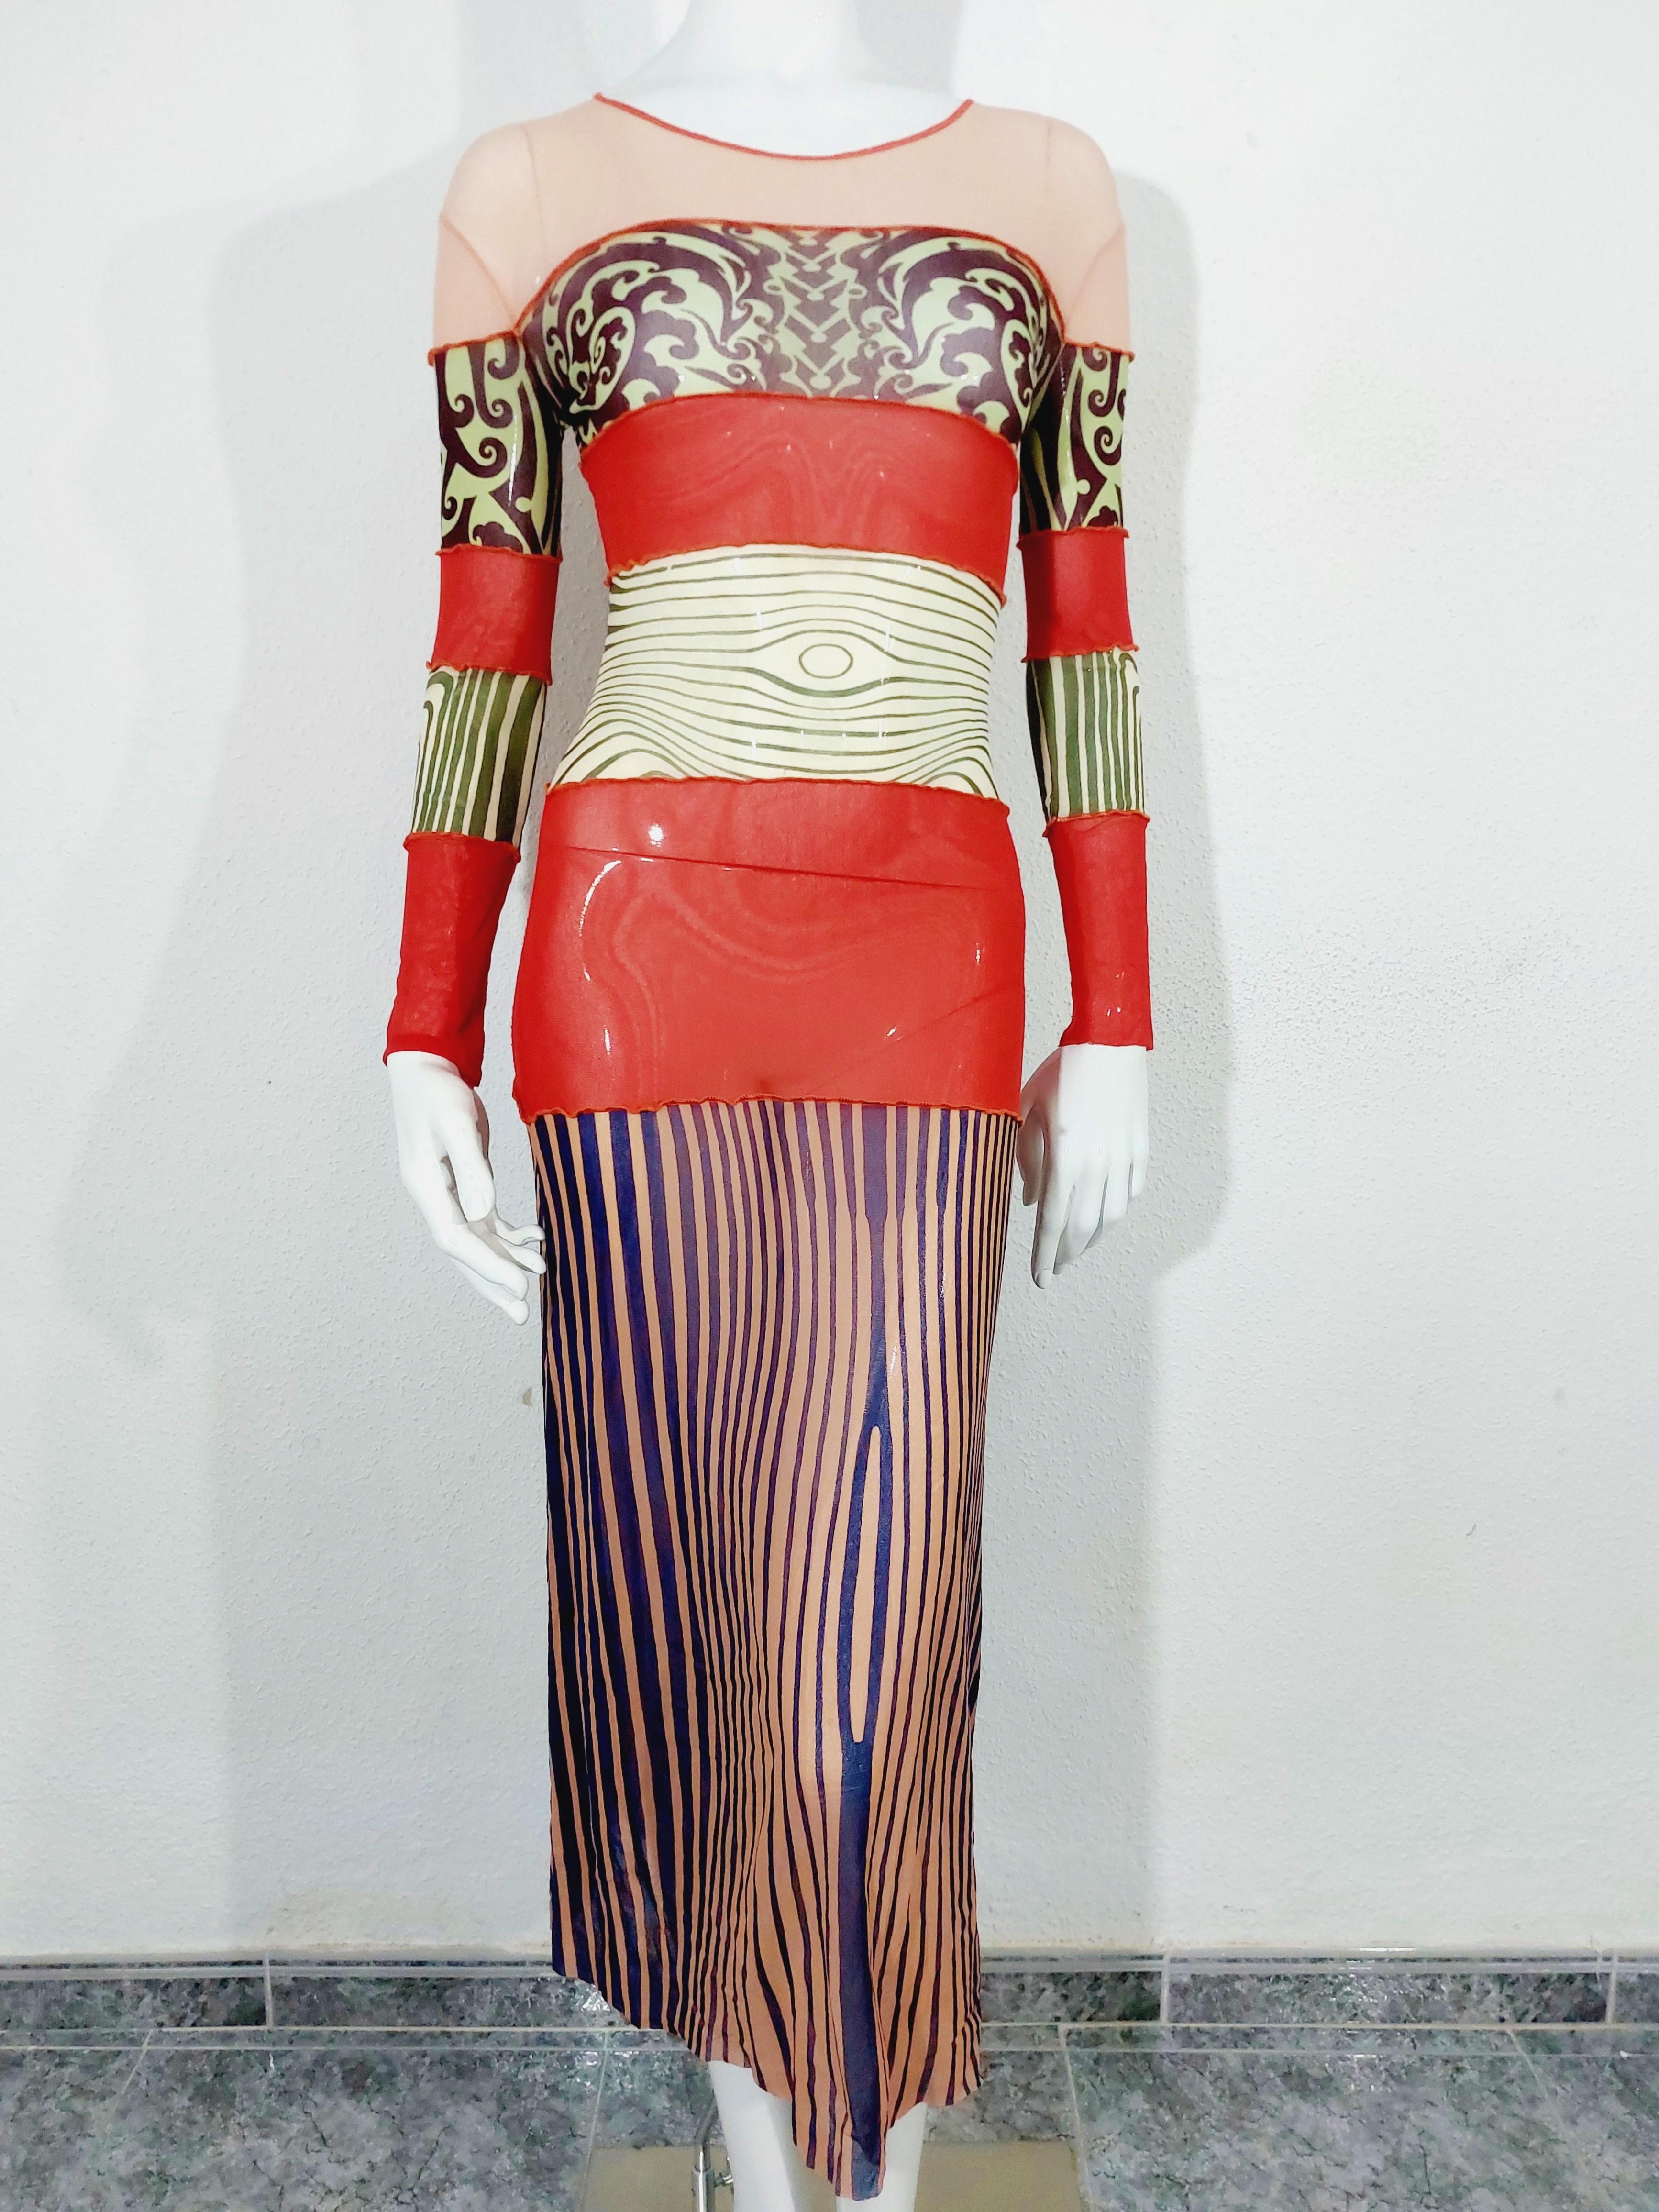 Rose Jean Paul Gaultier Optical Illusion Nude Ethic Trompe l'oeil Vanessa Guide Dress en vente